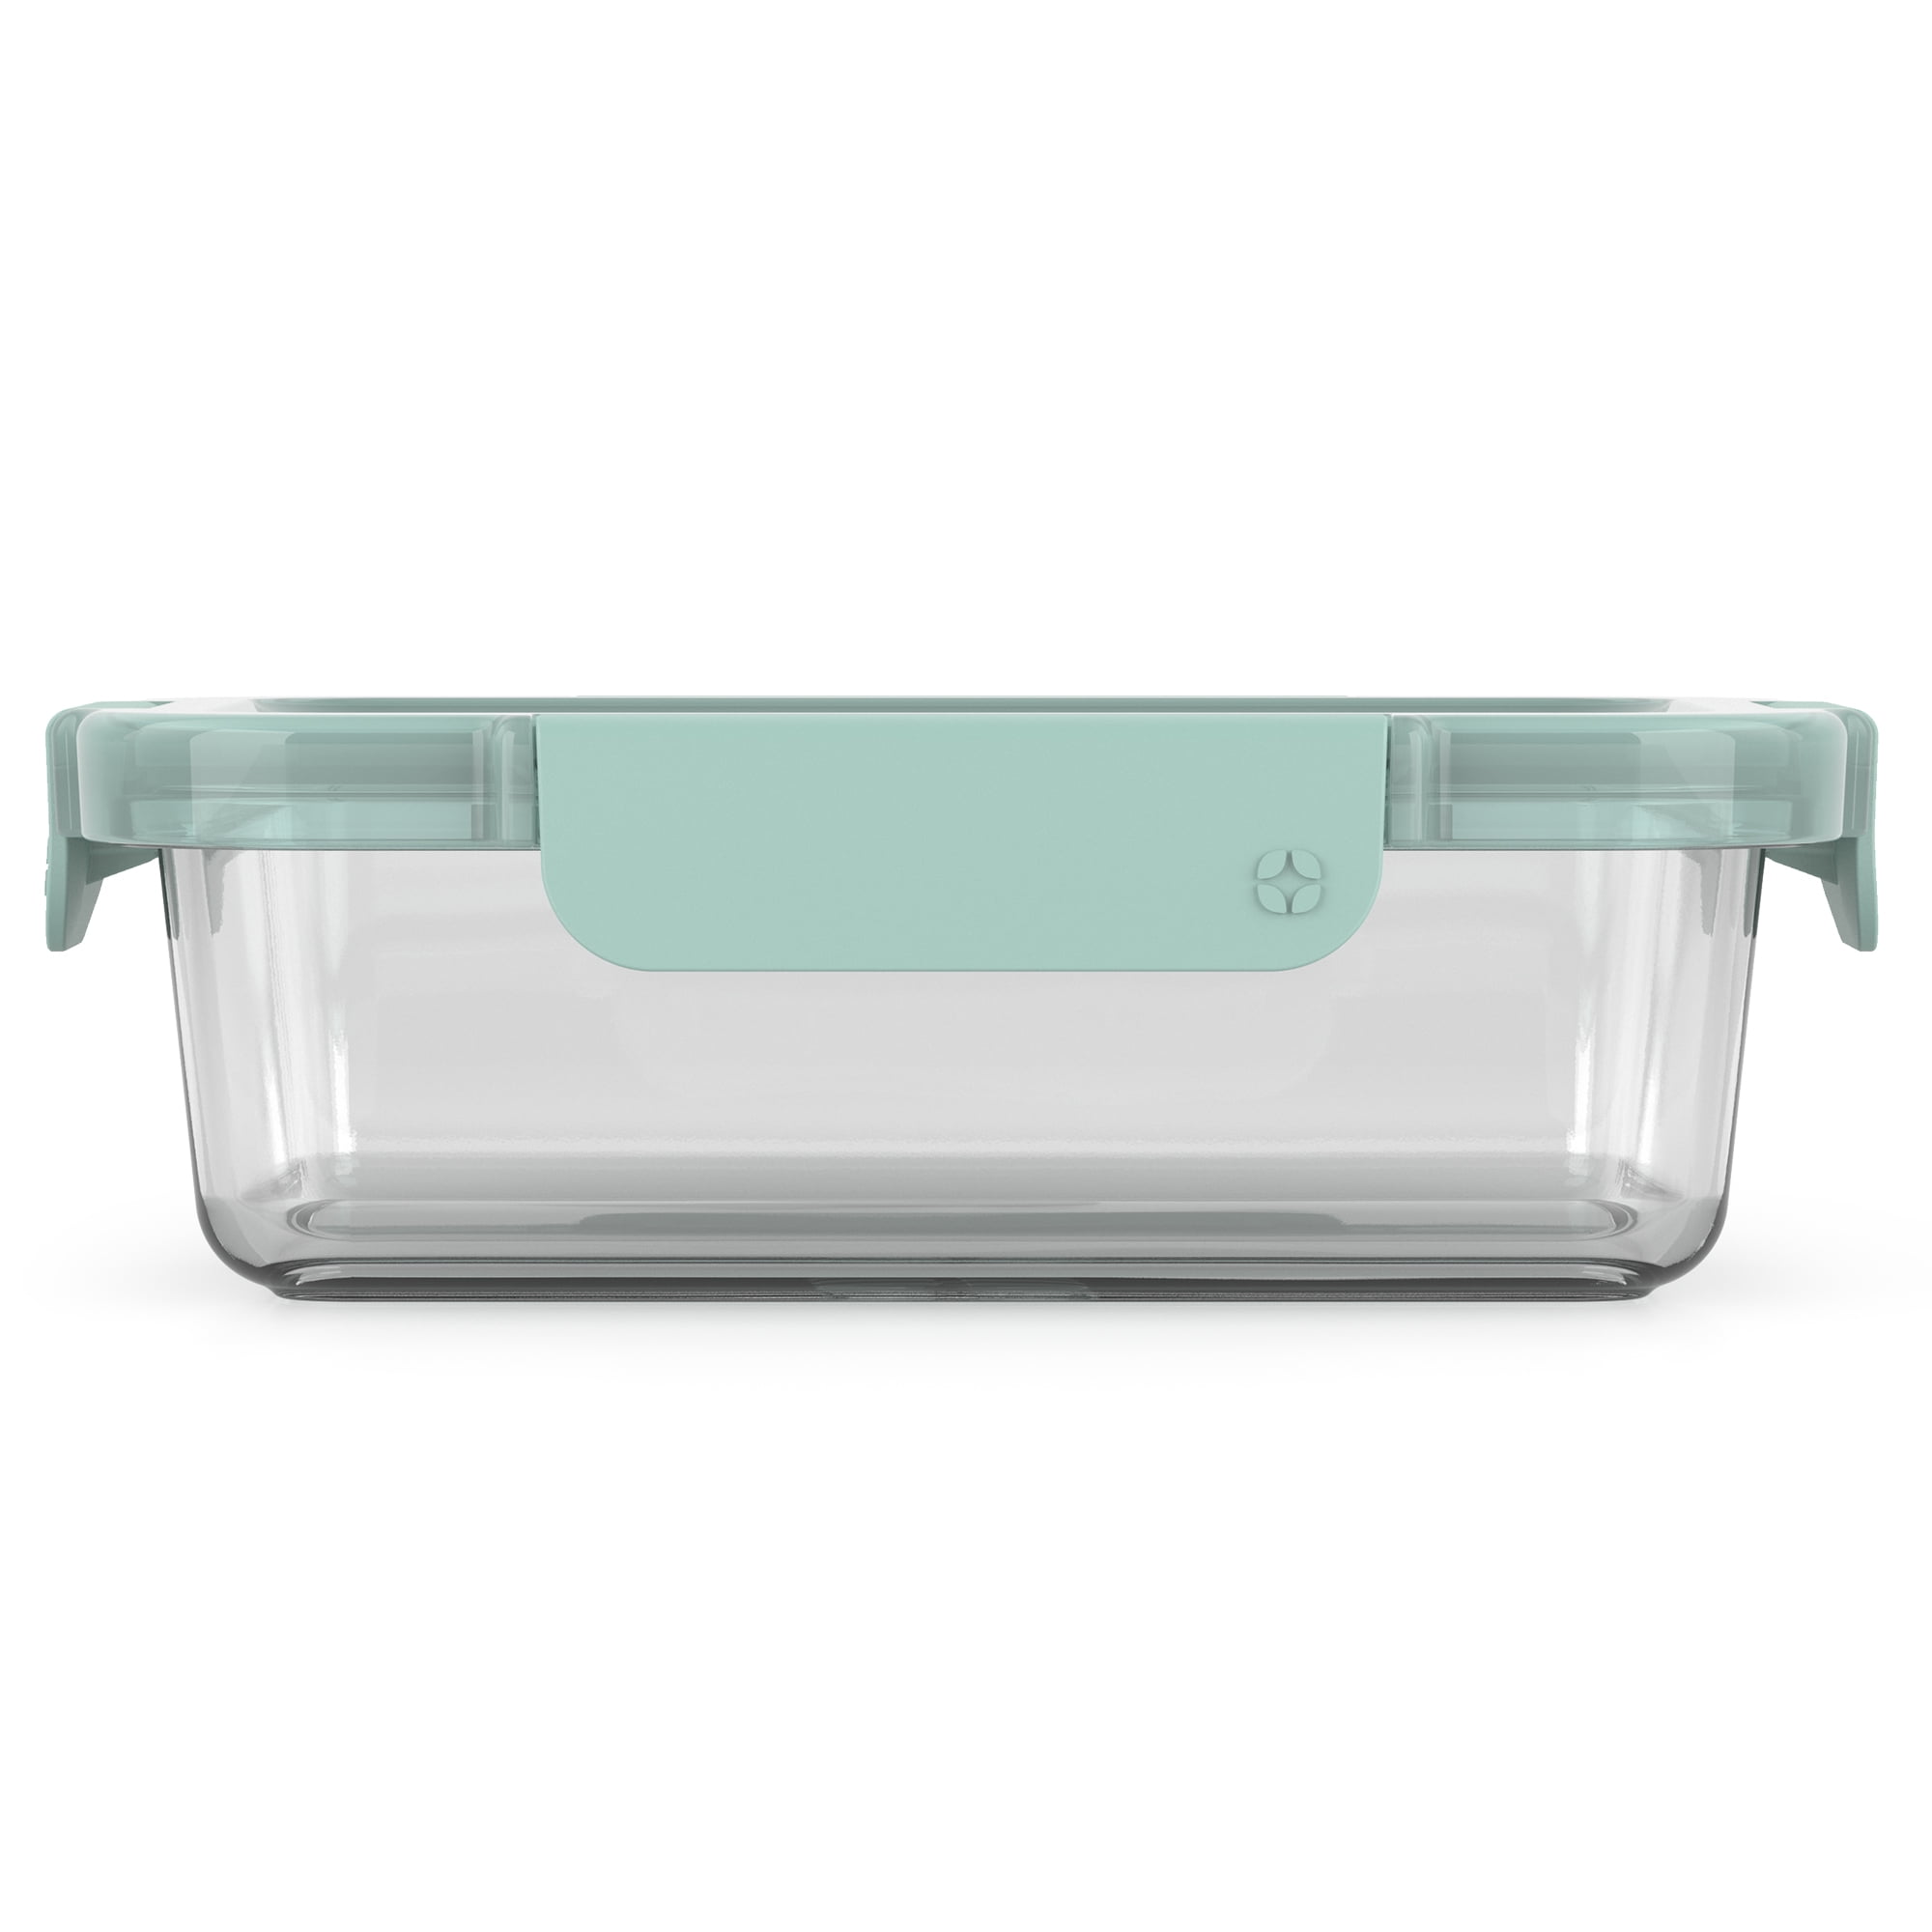 Ello 2-Compartment Glass Food Containers, 8-piece set – ShopEZ USA